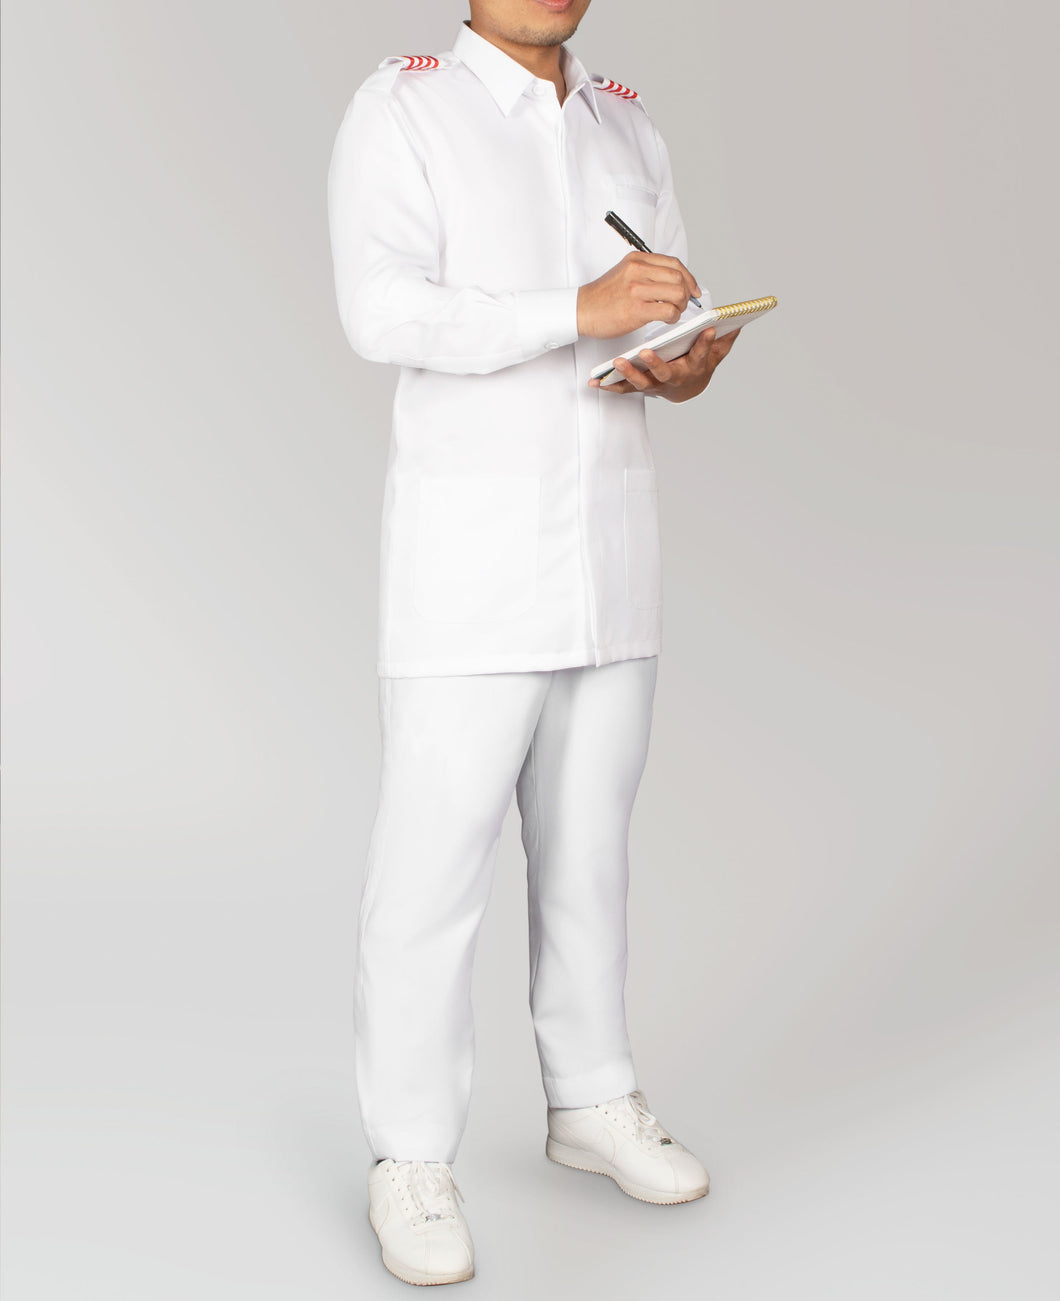 Men Student Nurse Uniform in Minimatt